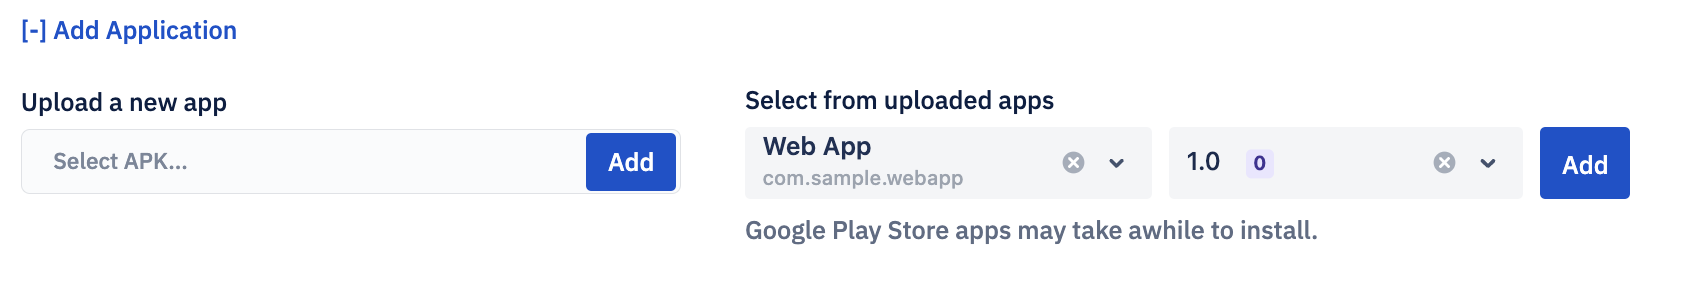 web-app-addedin-select-uploaded-apps.png